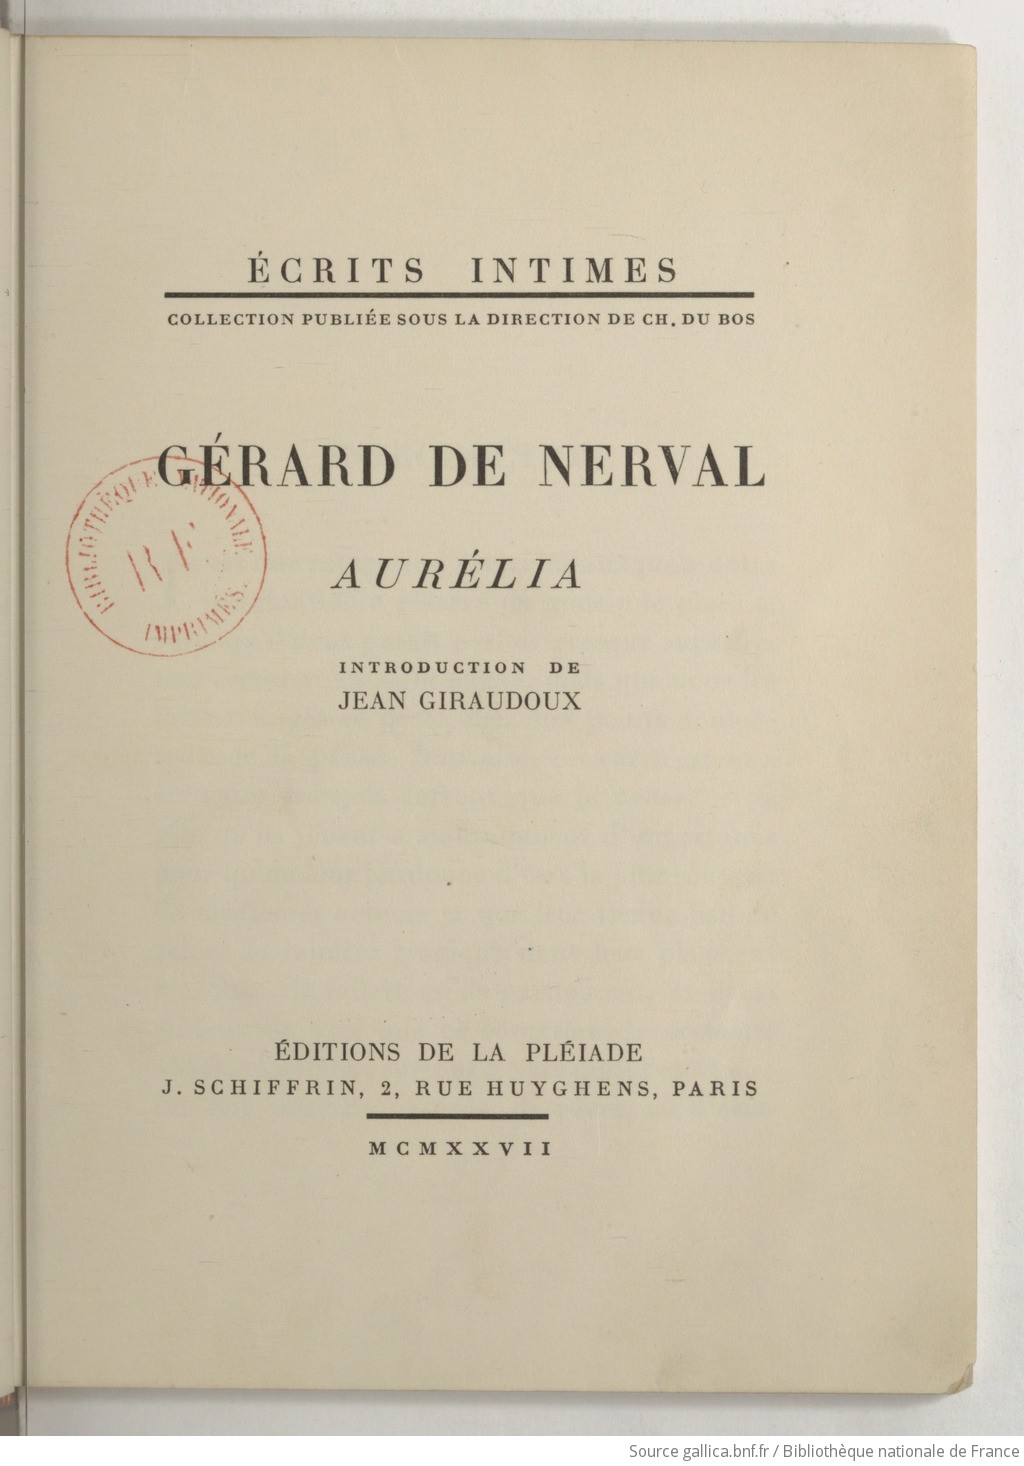 Aurélia / Gérard de Nerval ; introduction de Jean Giraudoux | Gallica